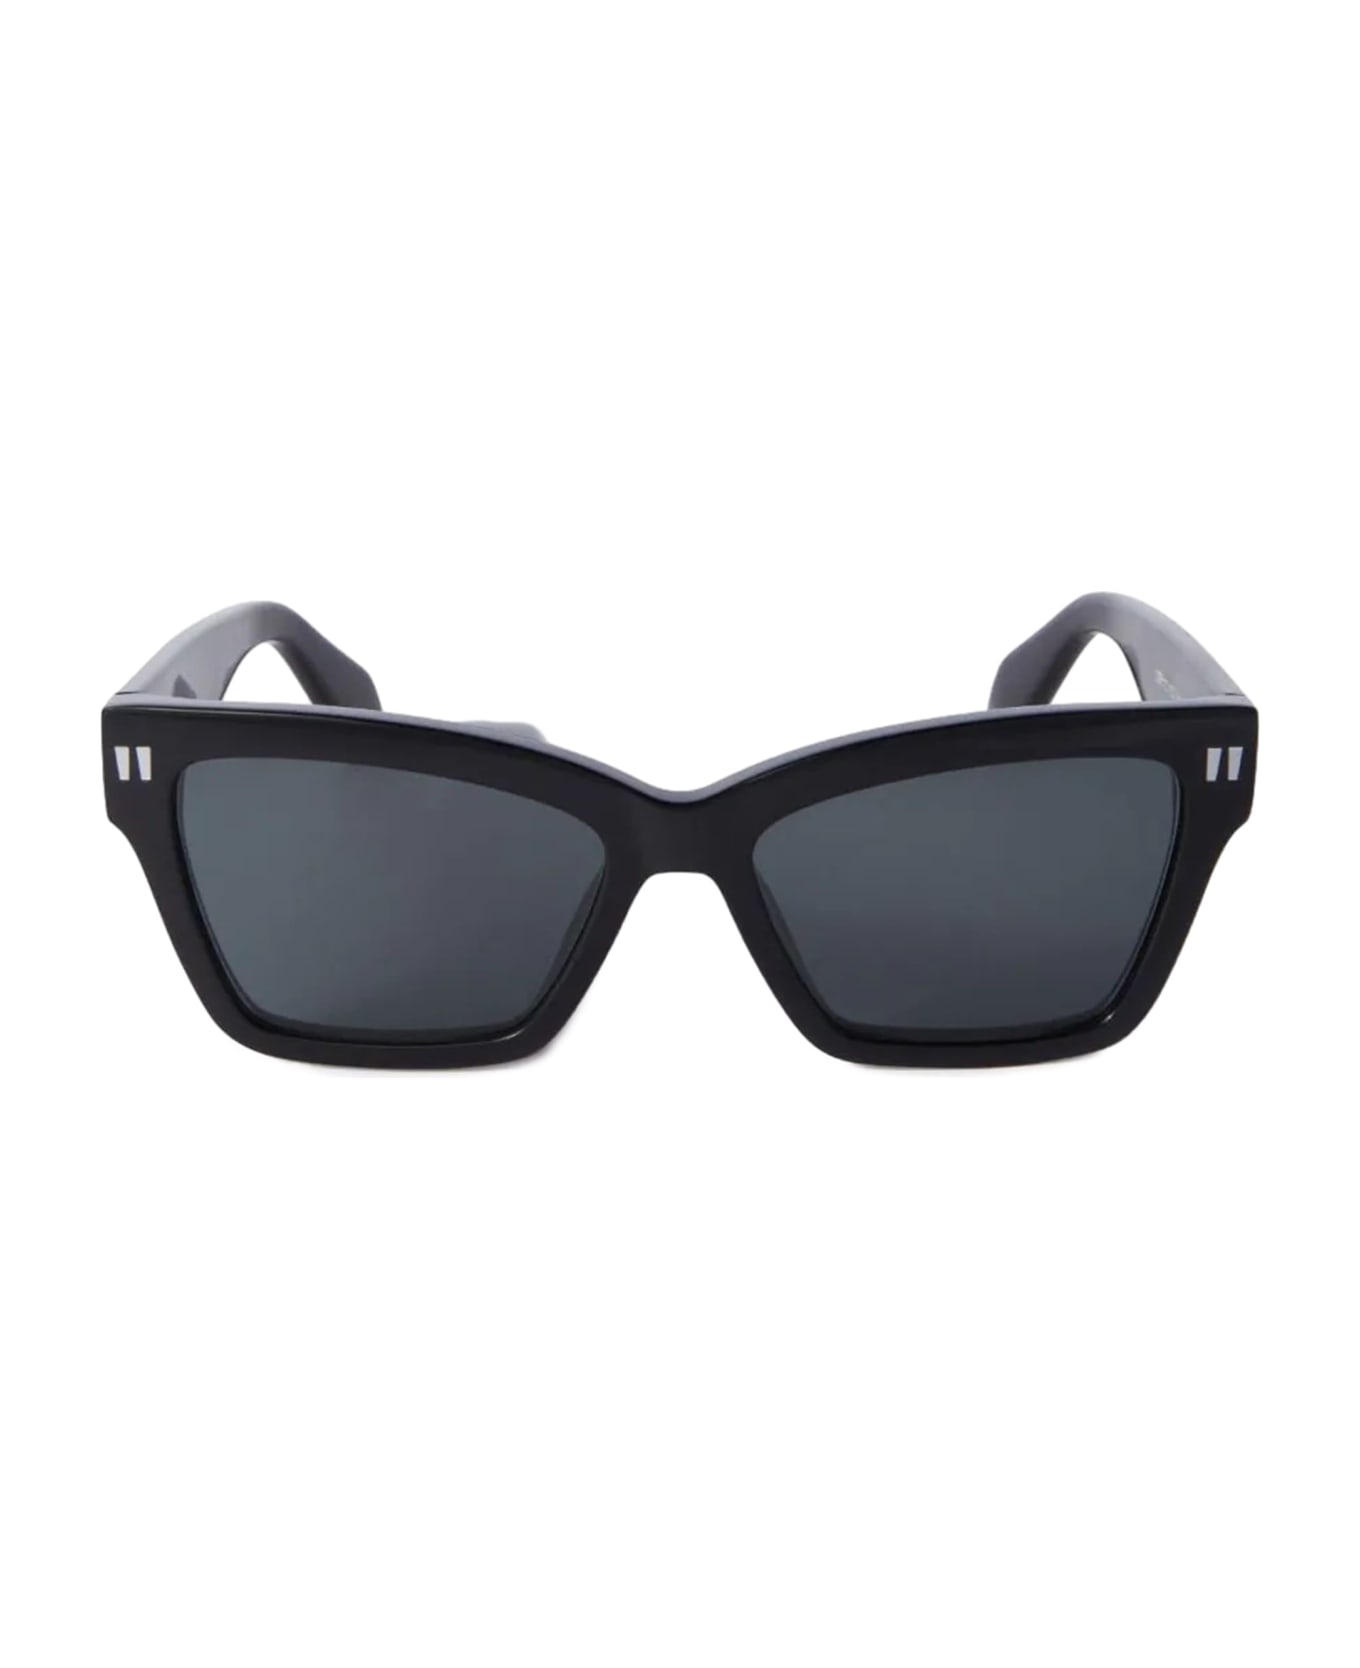 Off-White Cincinnati - Black / Dark Grey Sunglasses - Black